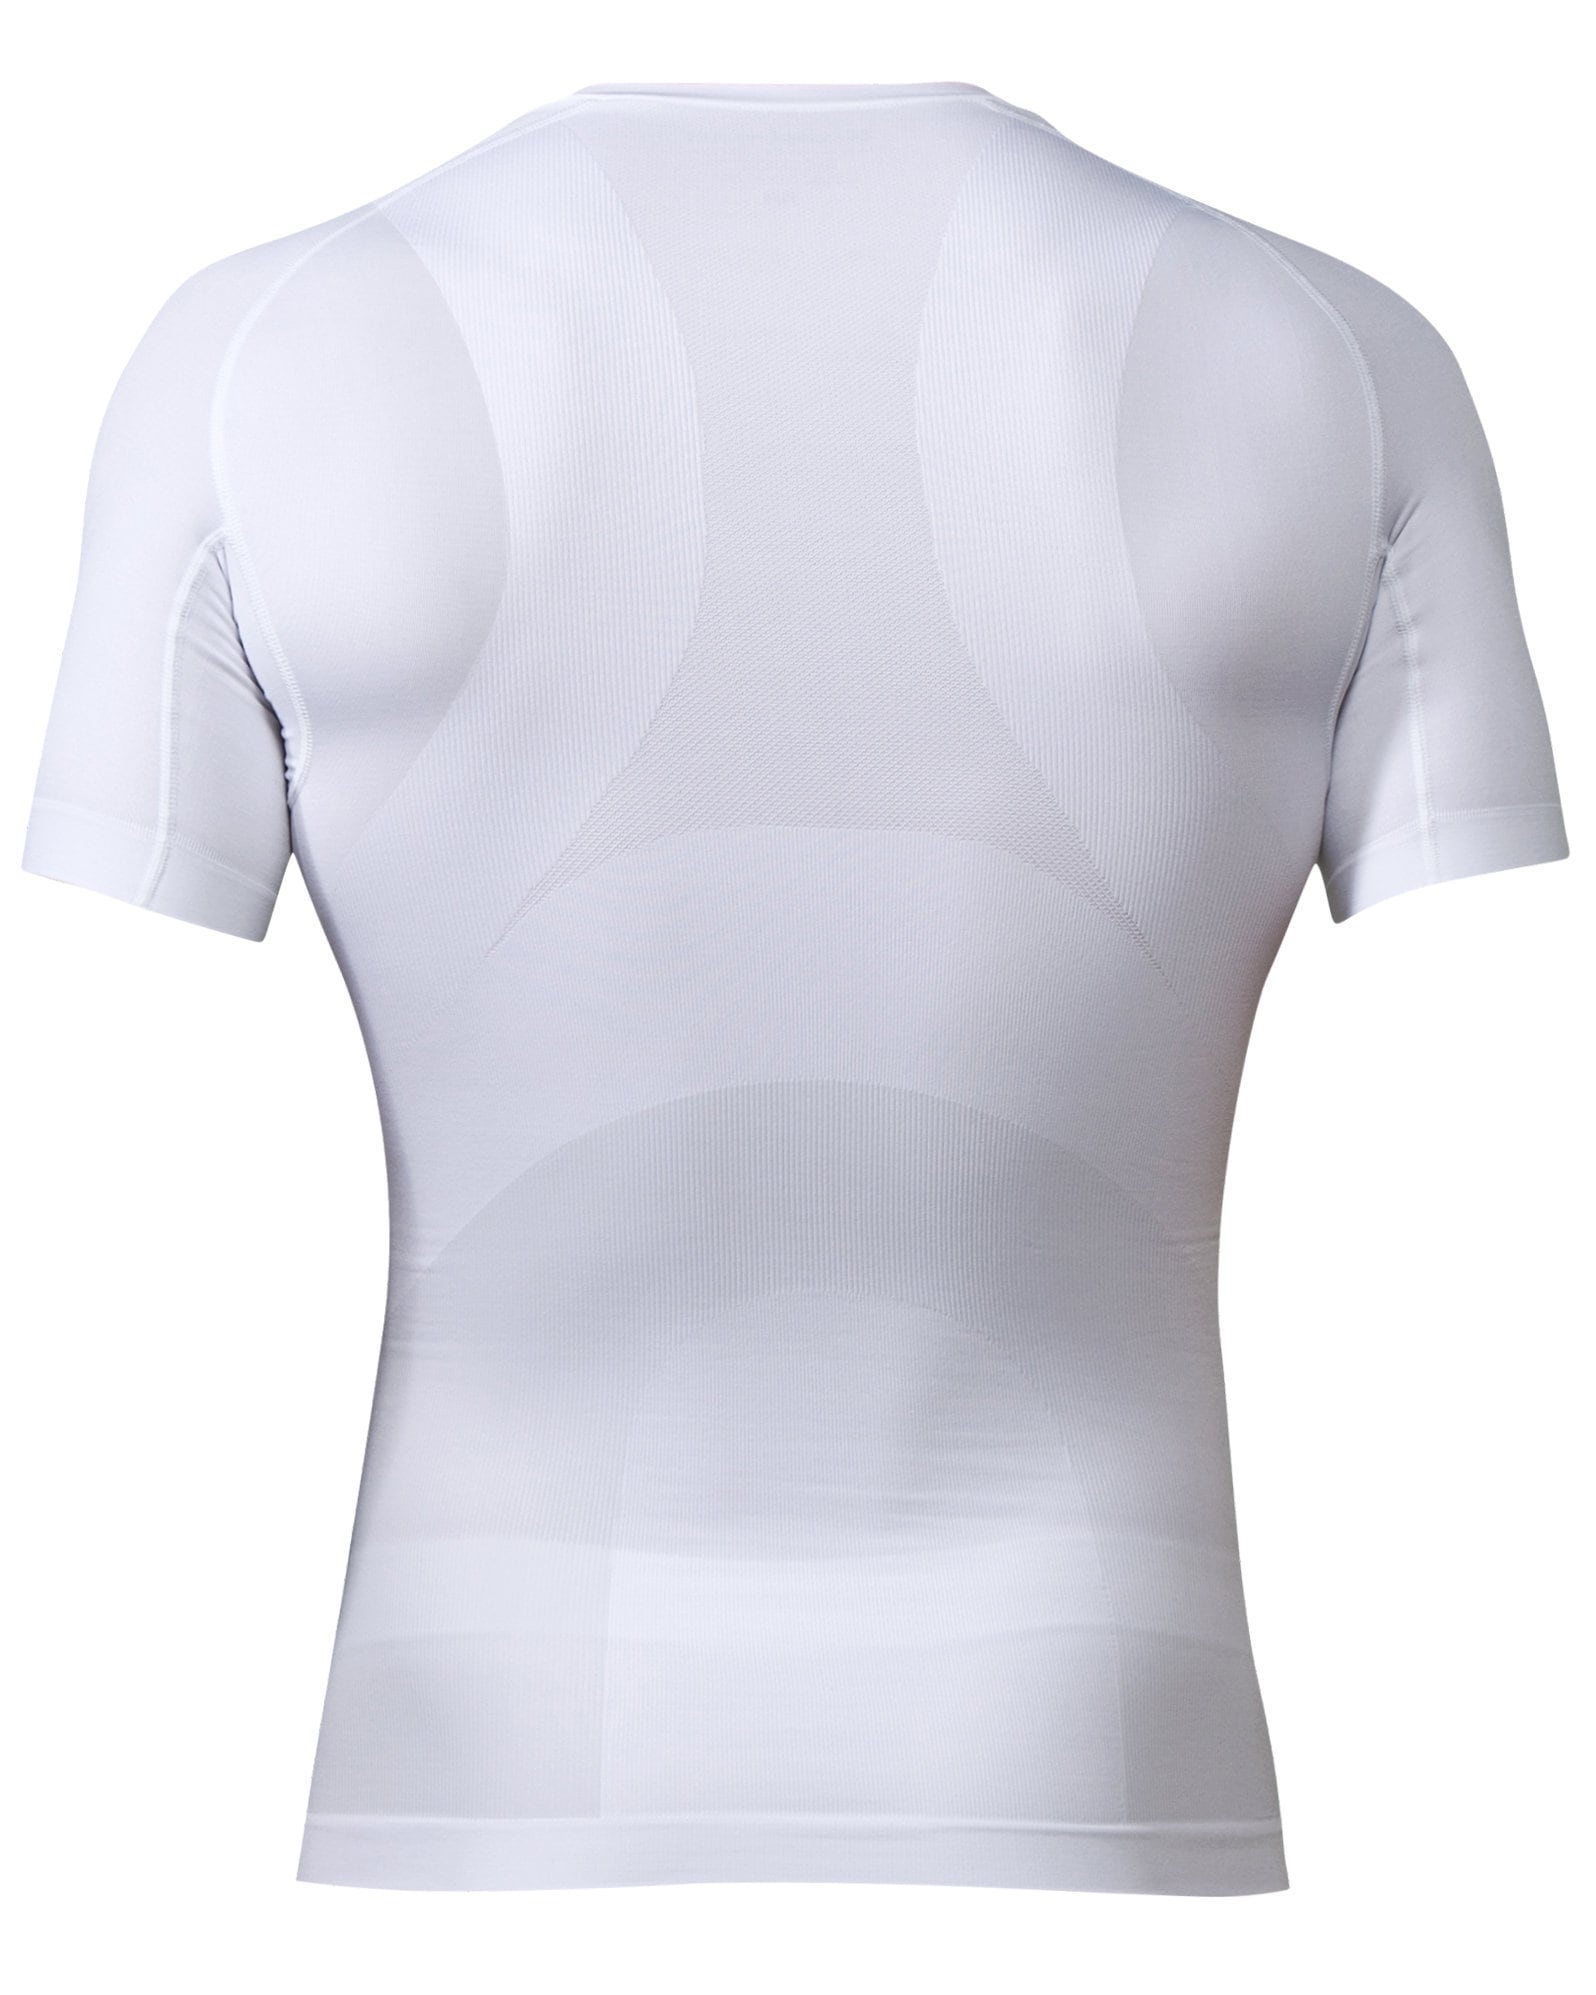 Knap'man Shop  Knap'man Compression Shirt V-Neck white